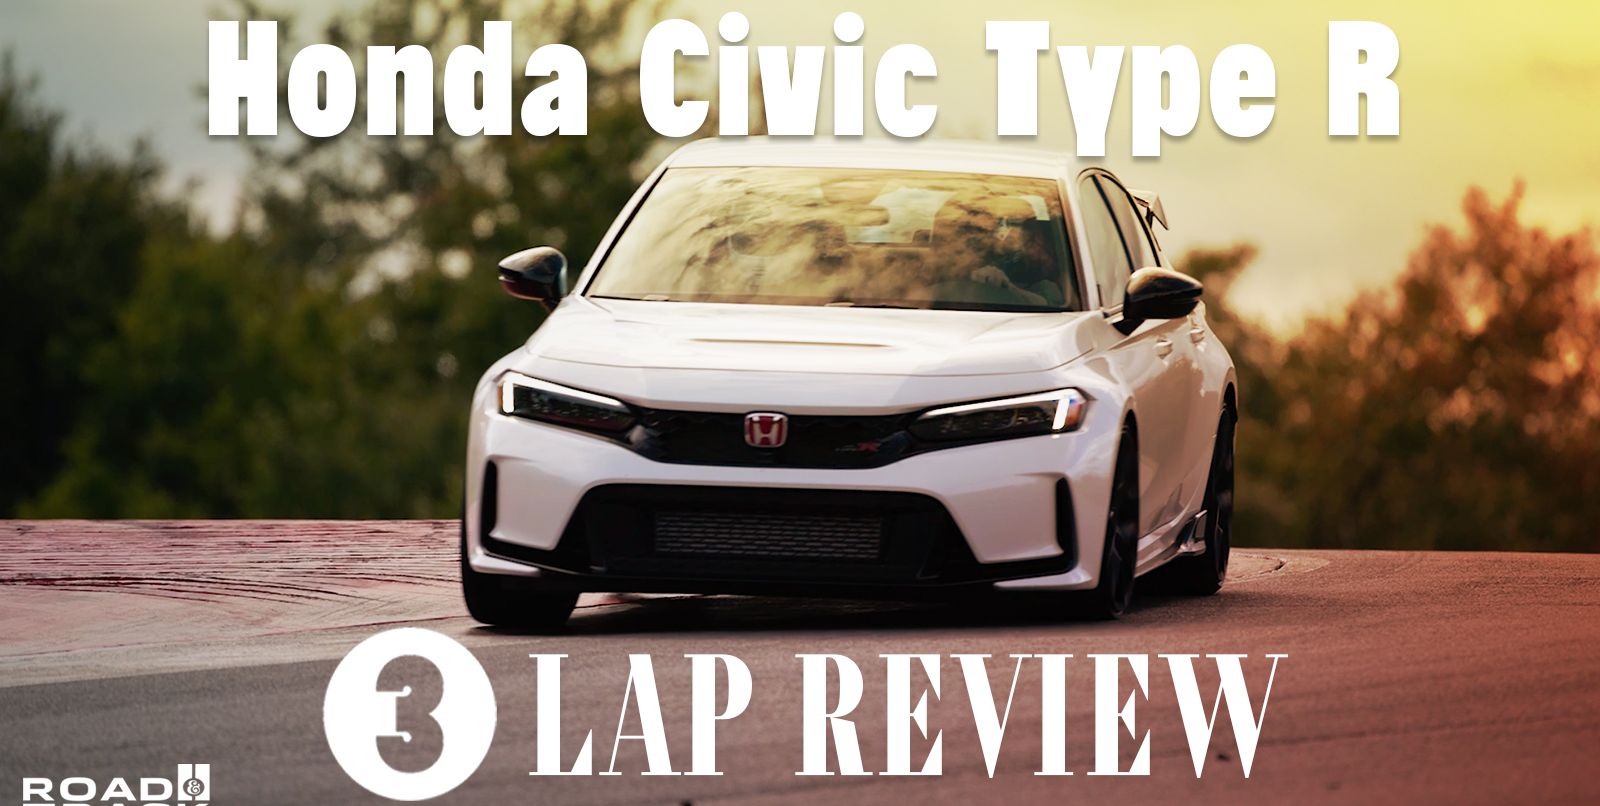 Matt Farah 3-Lap Video Review: The 2023 Honda Civic Type R Is an Impressive Track Machine